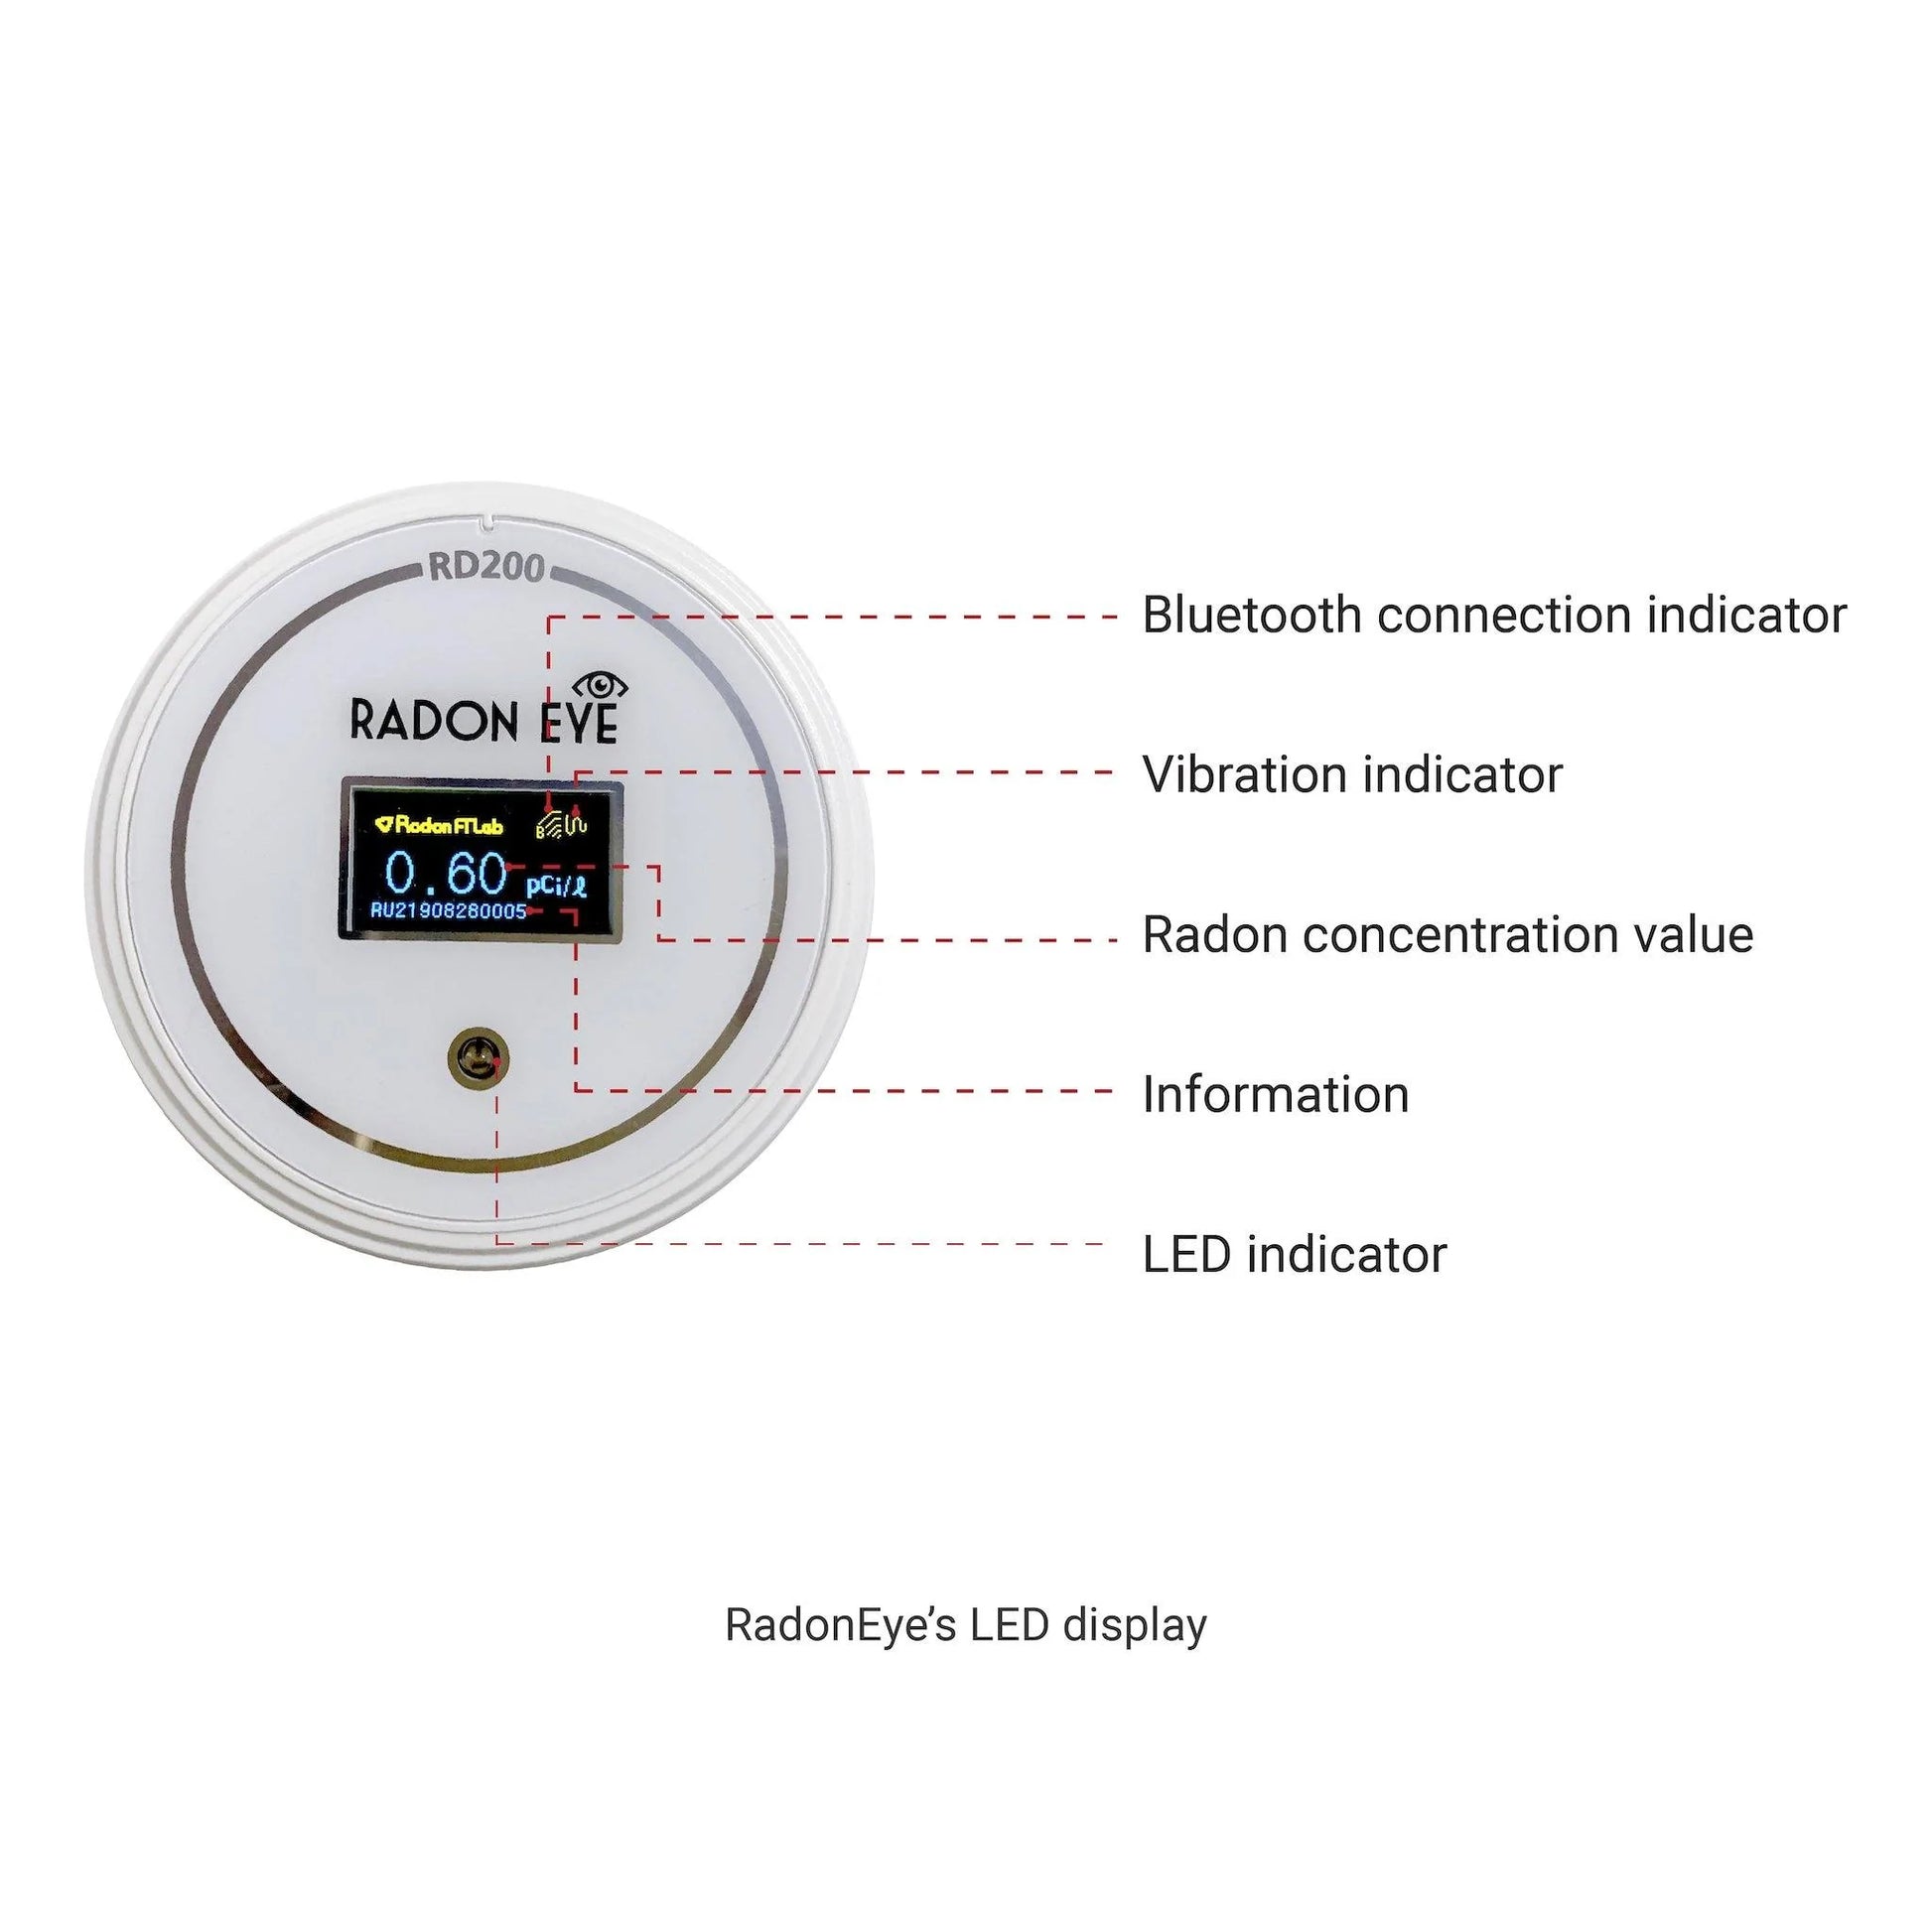 Radon Eye Rd200 Smart Radon Monitor Detector For Home